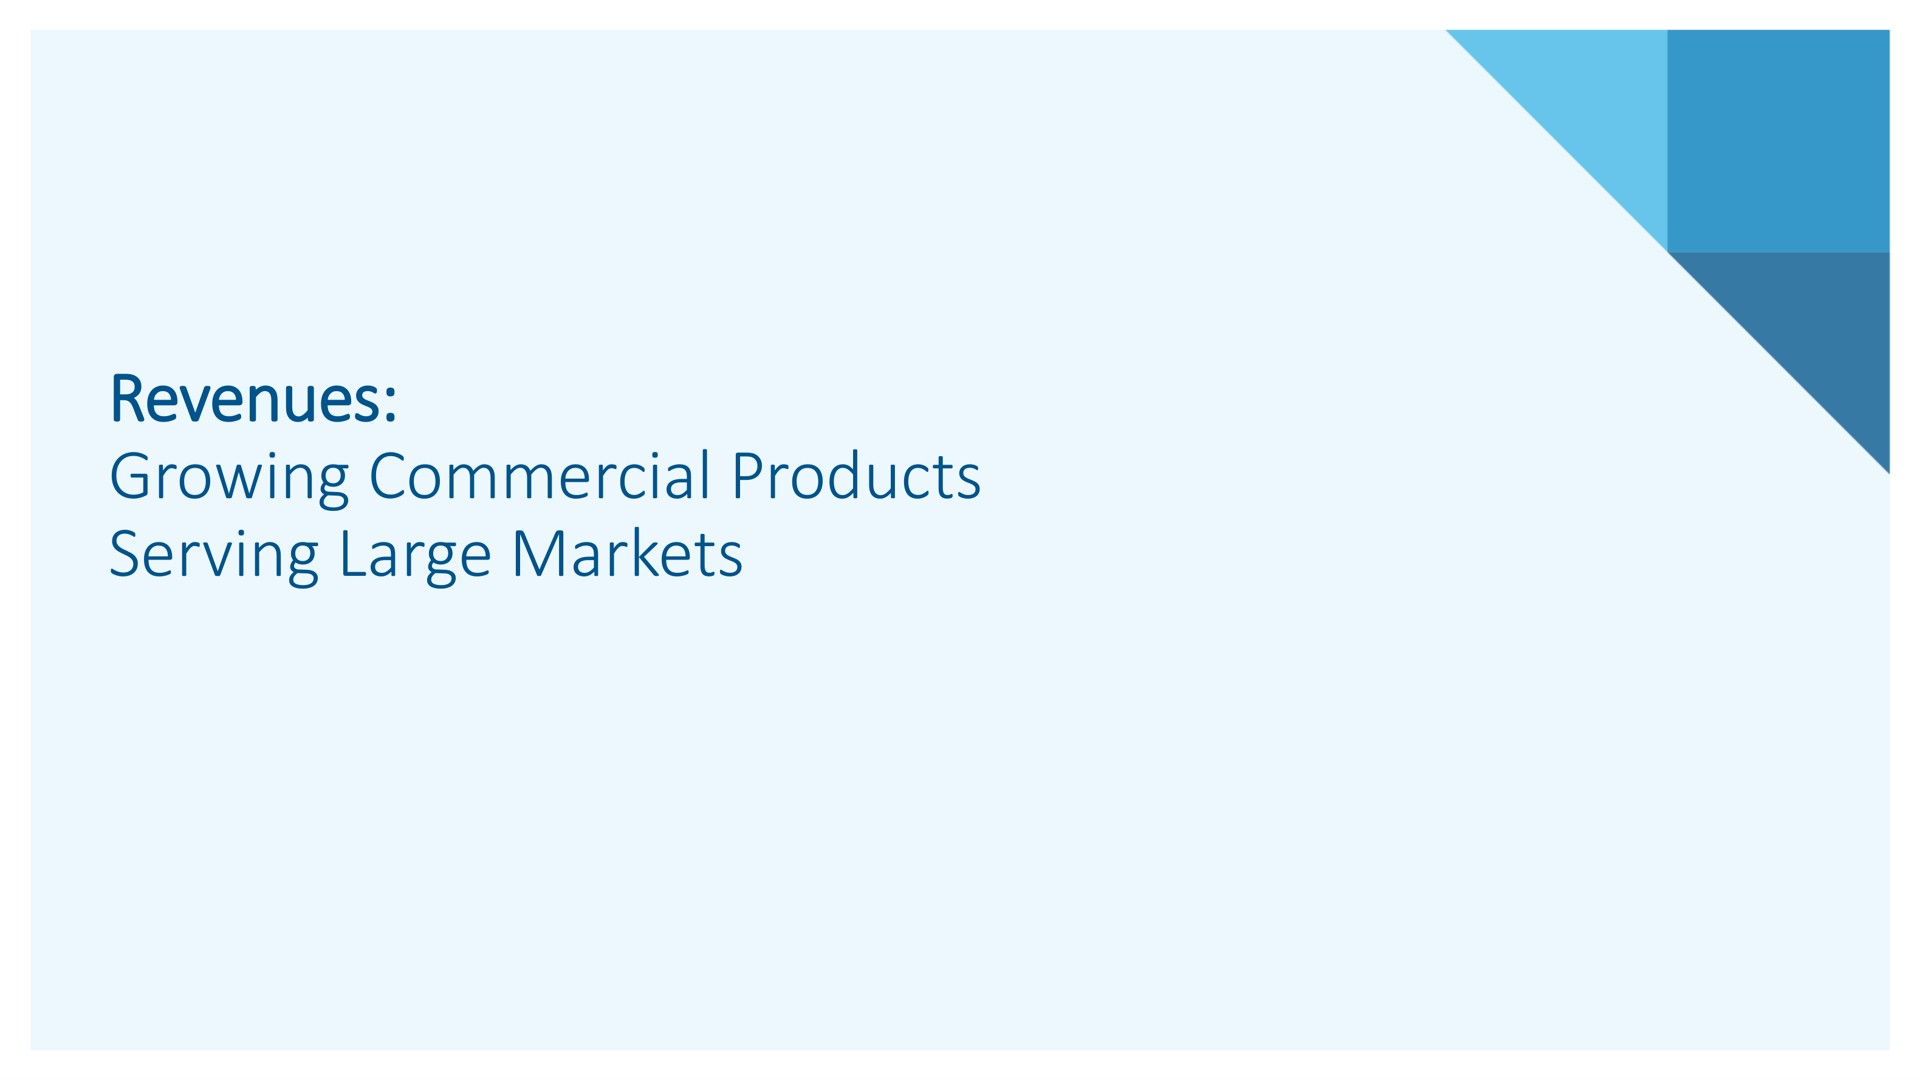 revenues growing commercial products serving large markets | Alkermes